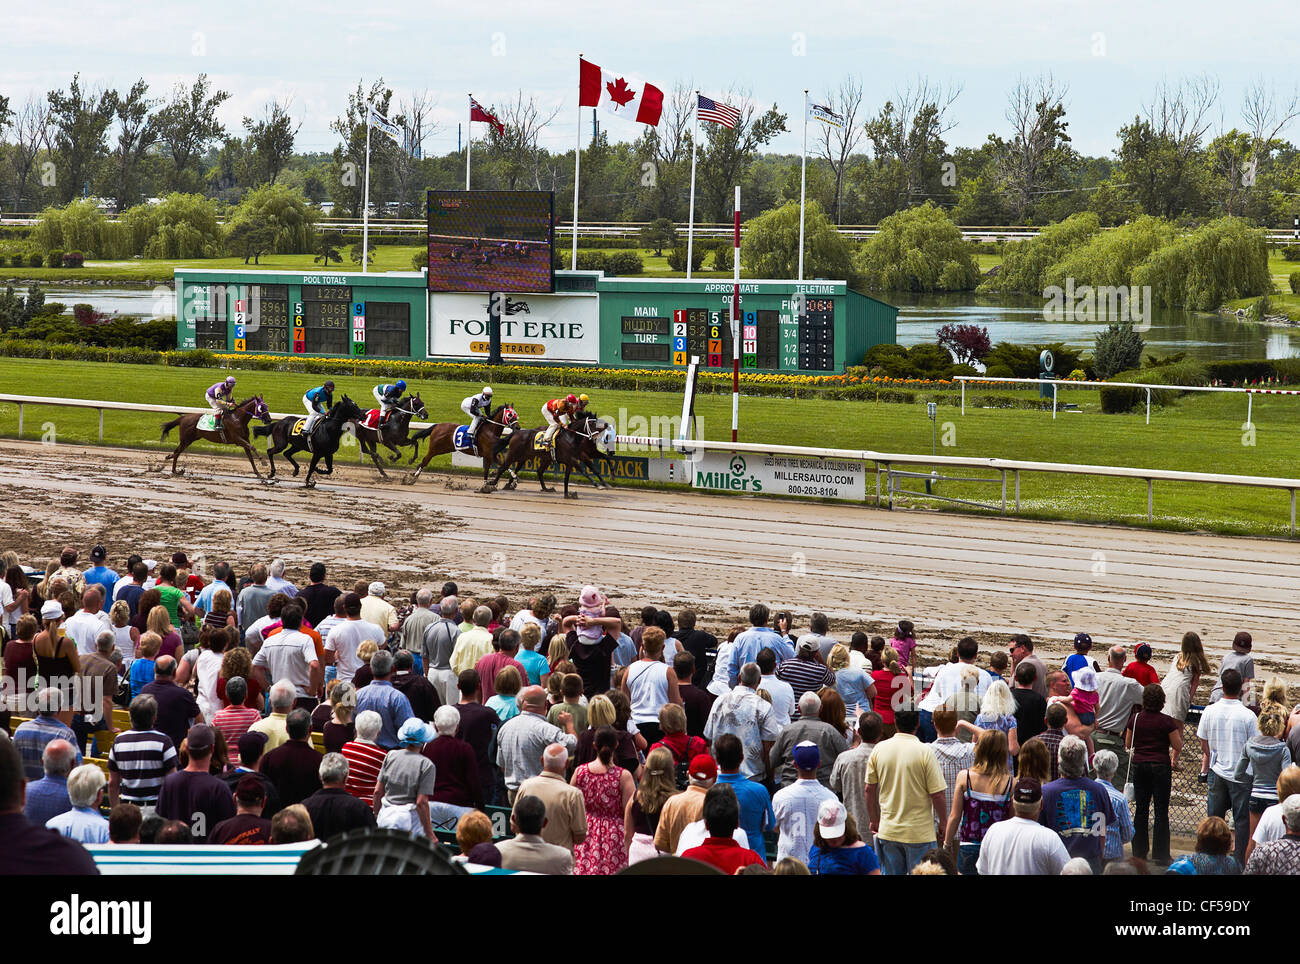 Kanada, Ontario, Fort Erie, Menschenmenge beobachten Pferderennen fertig Wetter Dirt-Track. Stockfoto